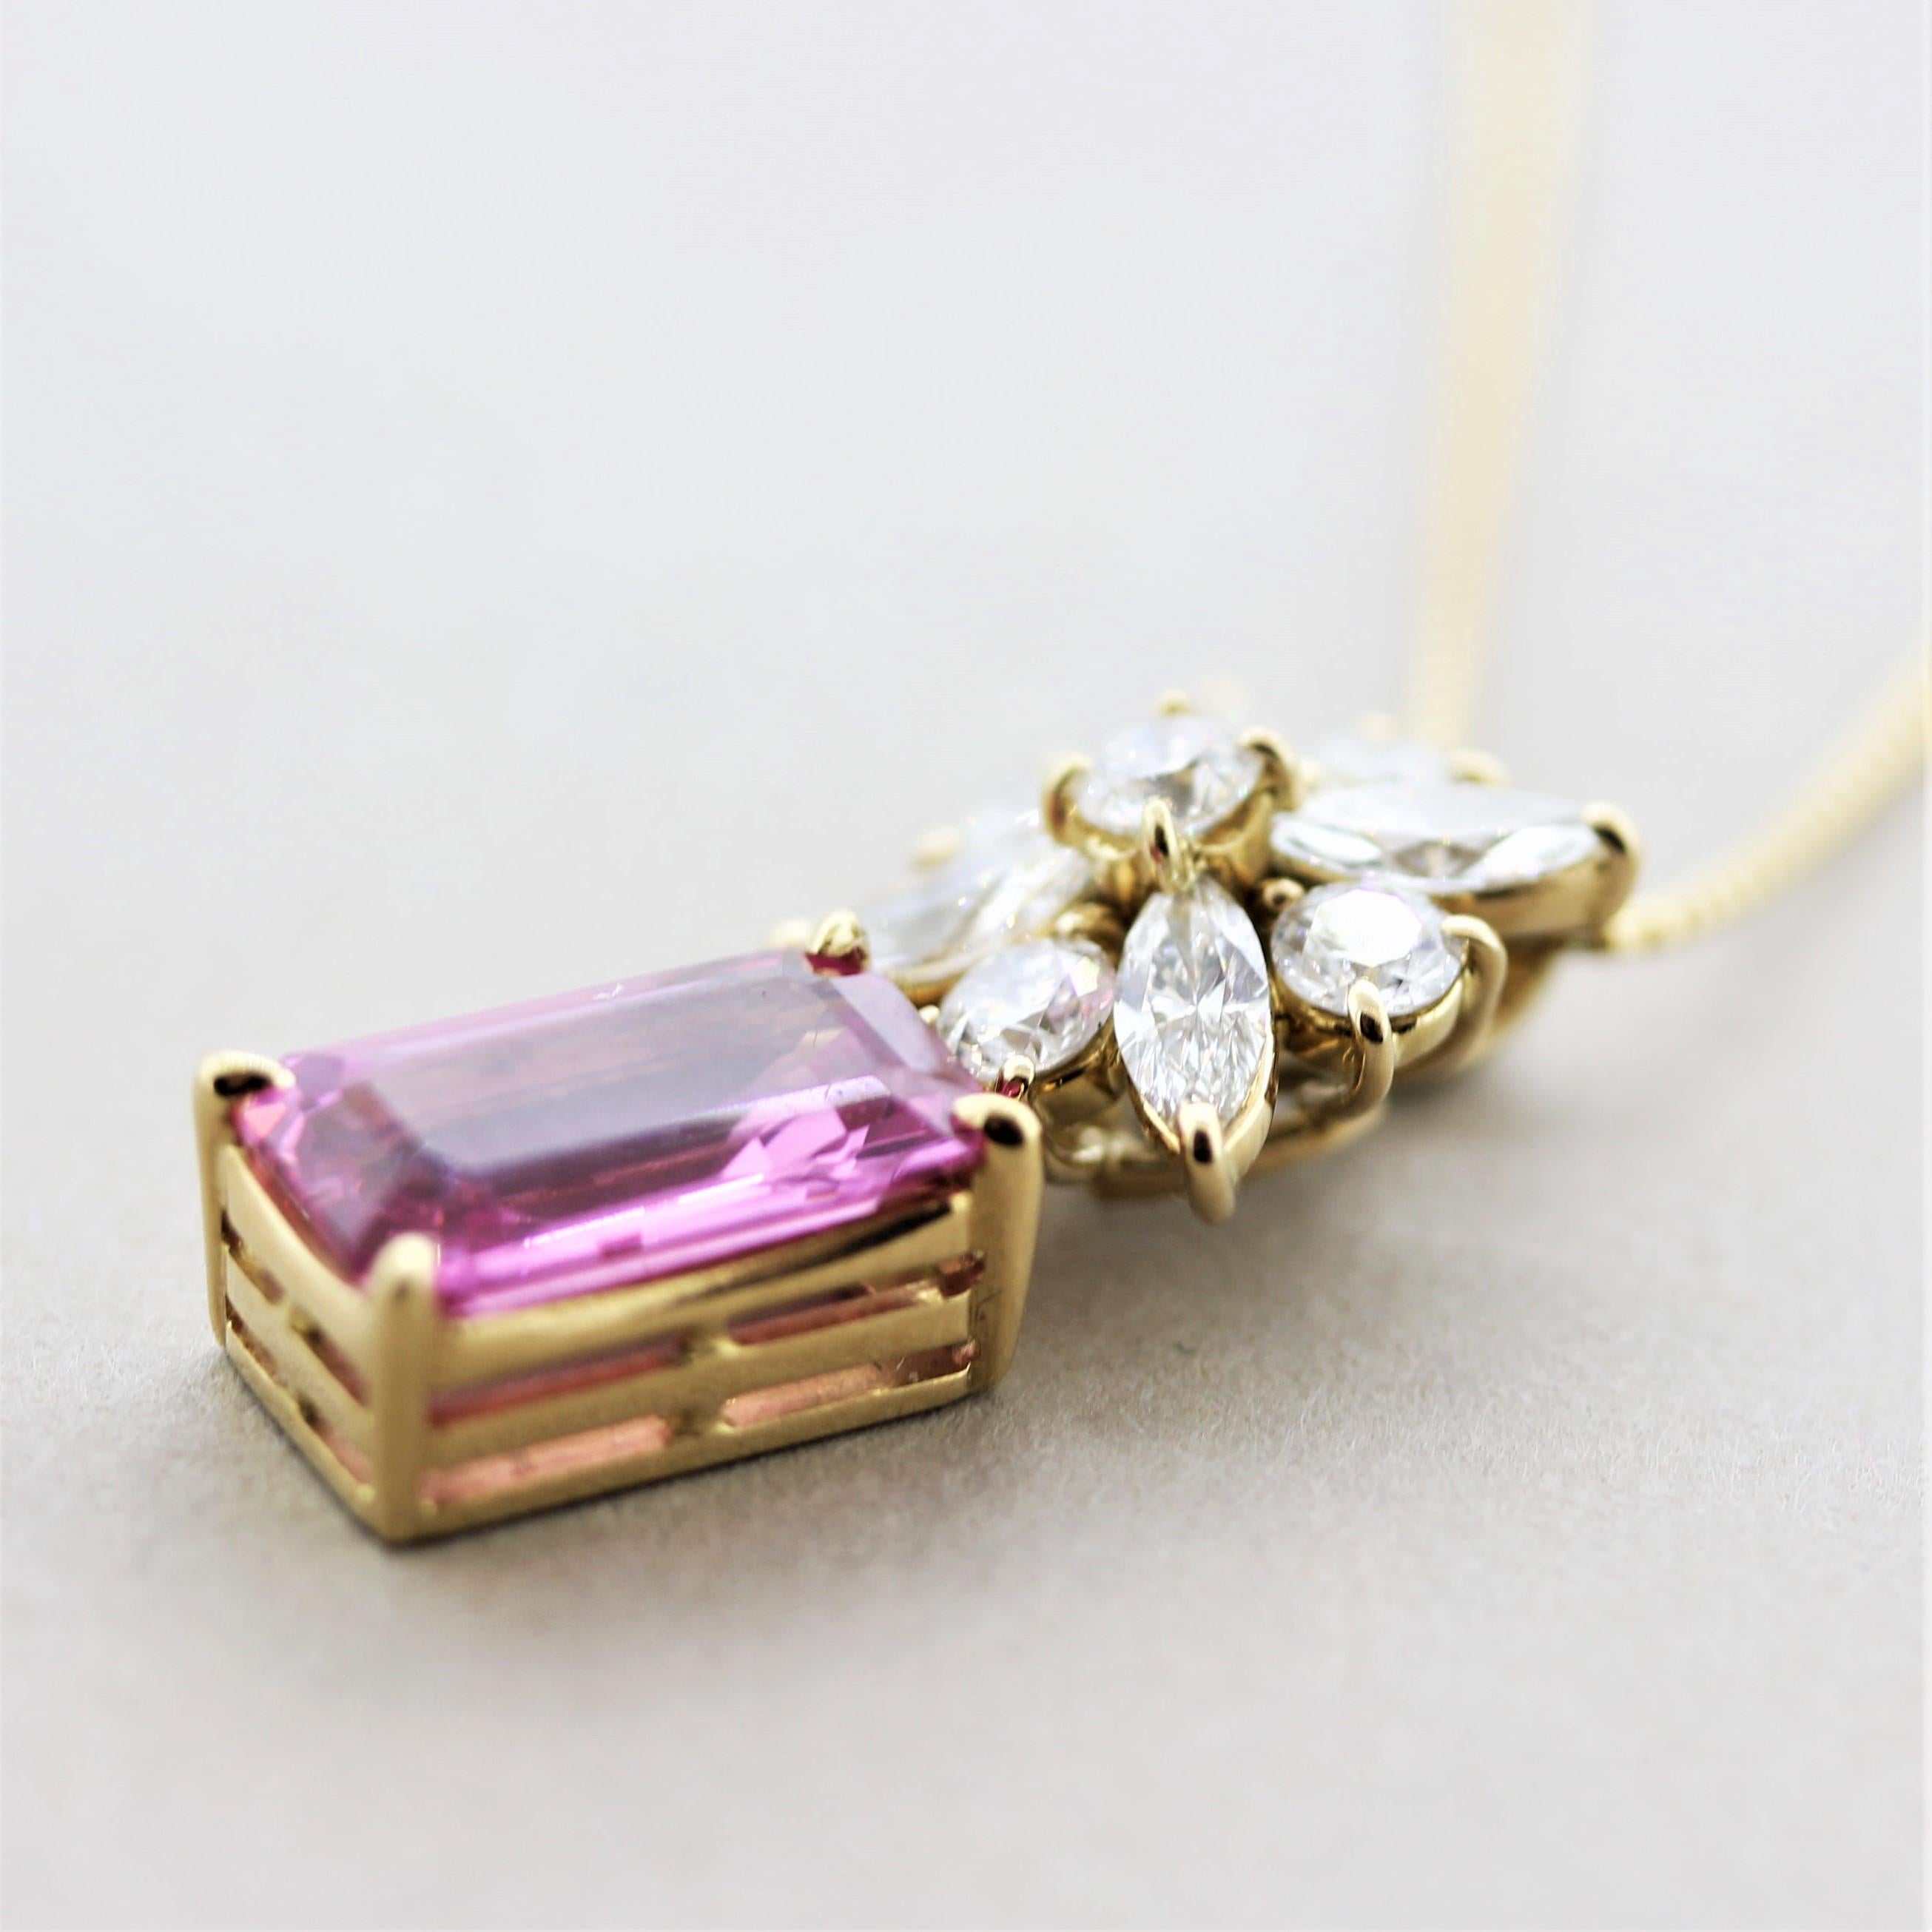 Mixed Cut No-Heat Pink Sapphire Diamond Gold Pendant, GIA Certified